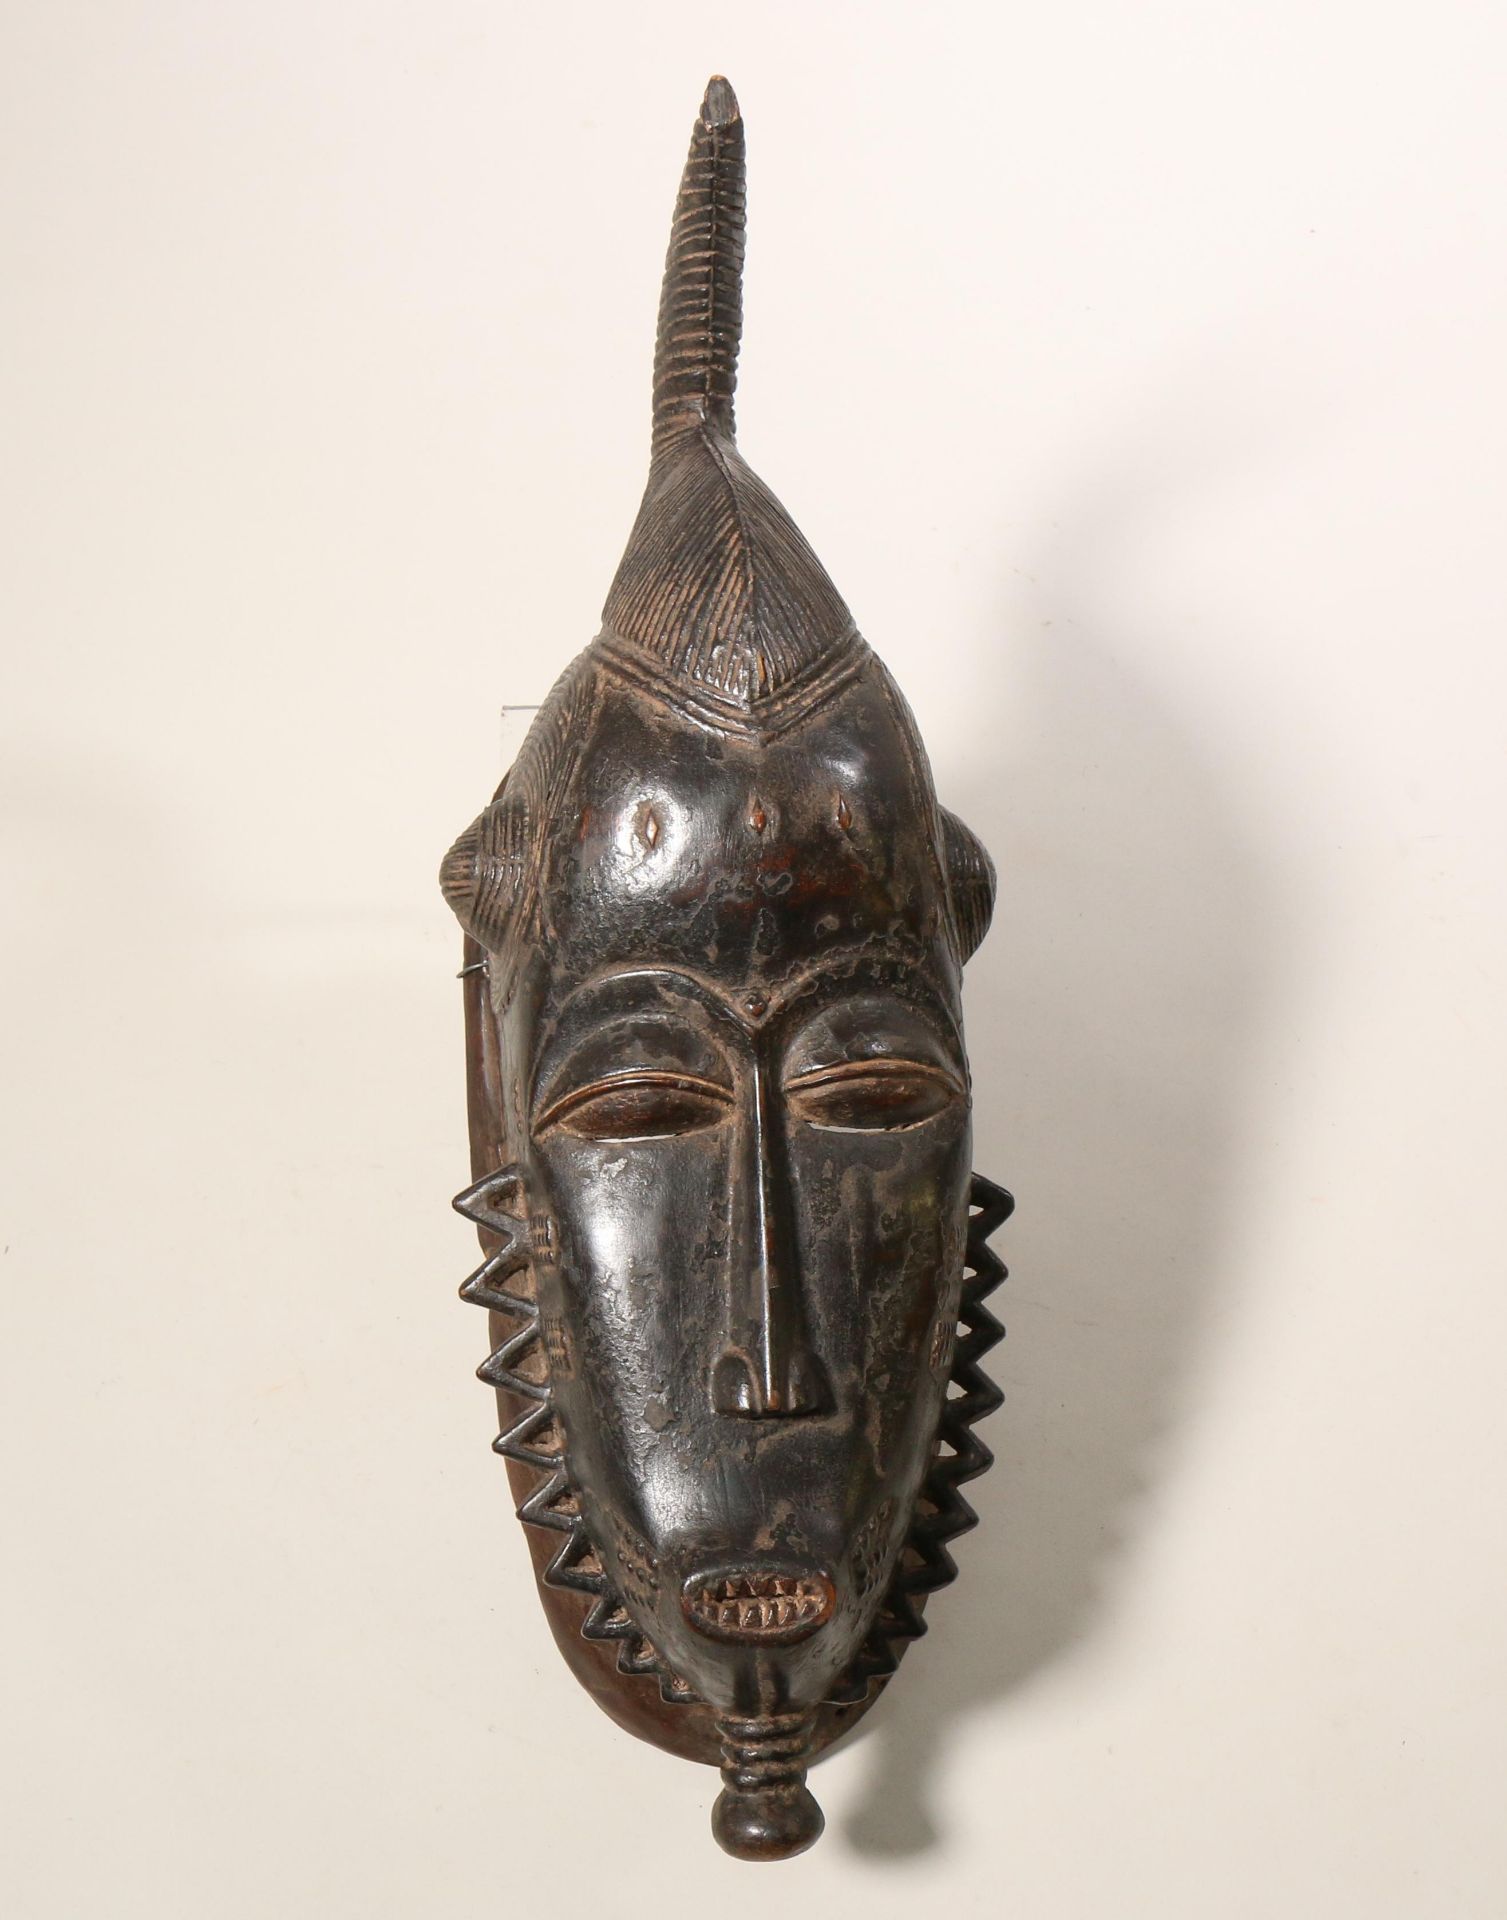 Ivory Coast, mask in the Baule style